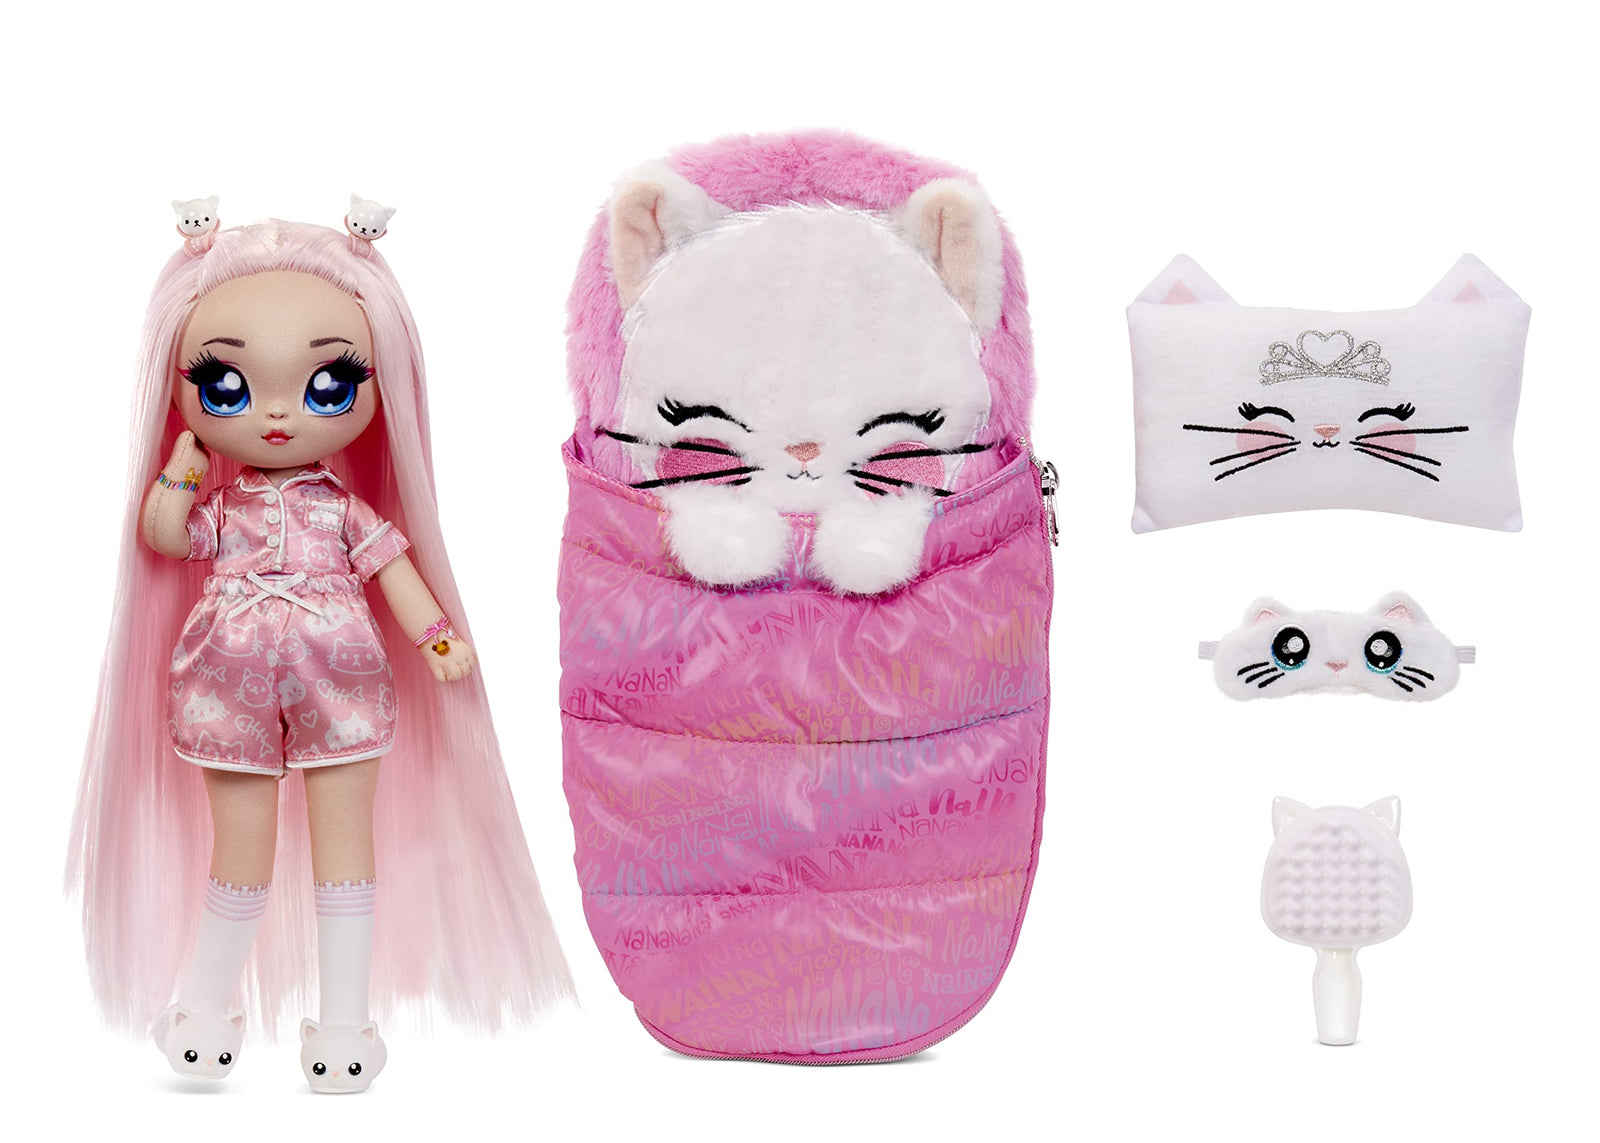 MGA Entertainment Na! Na! Na! Surprise Teens Slumber Party Doll 2 Multicolor ,11 inches